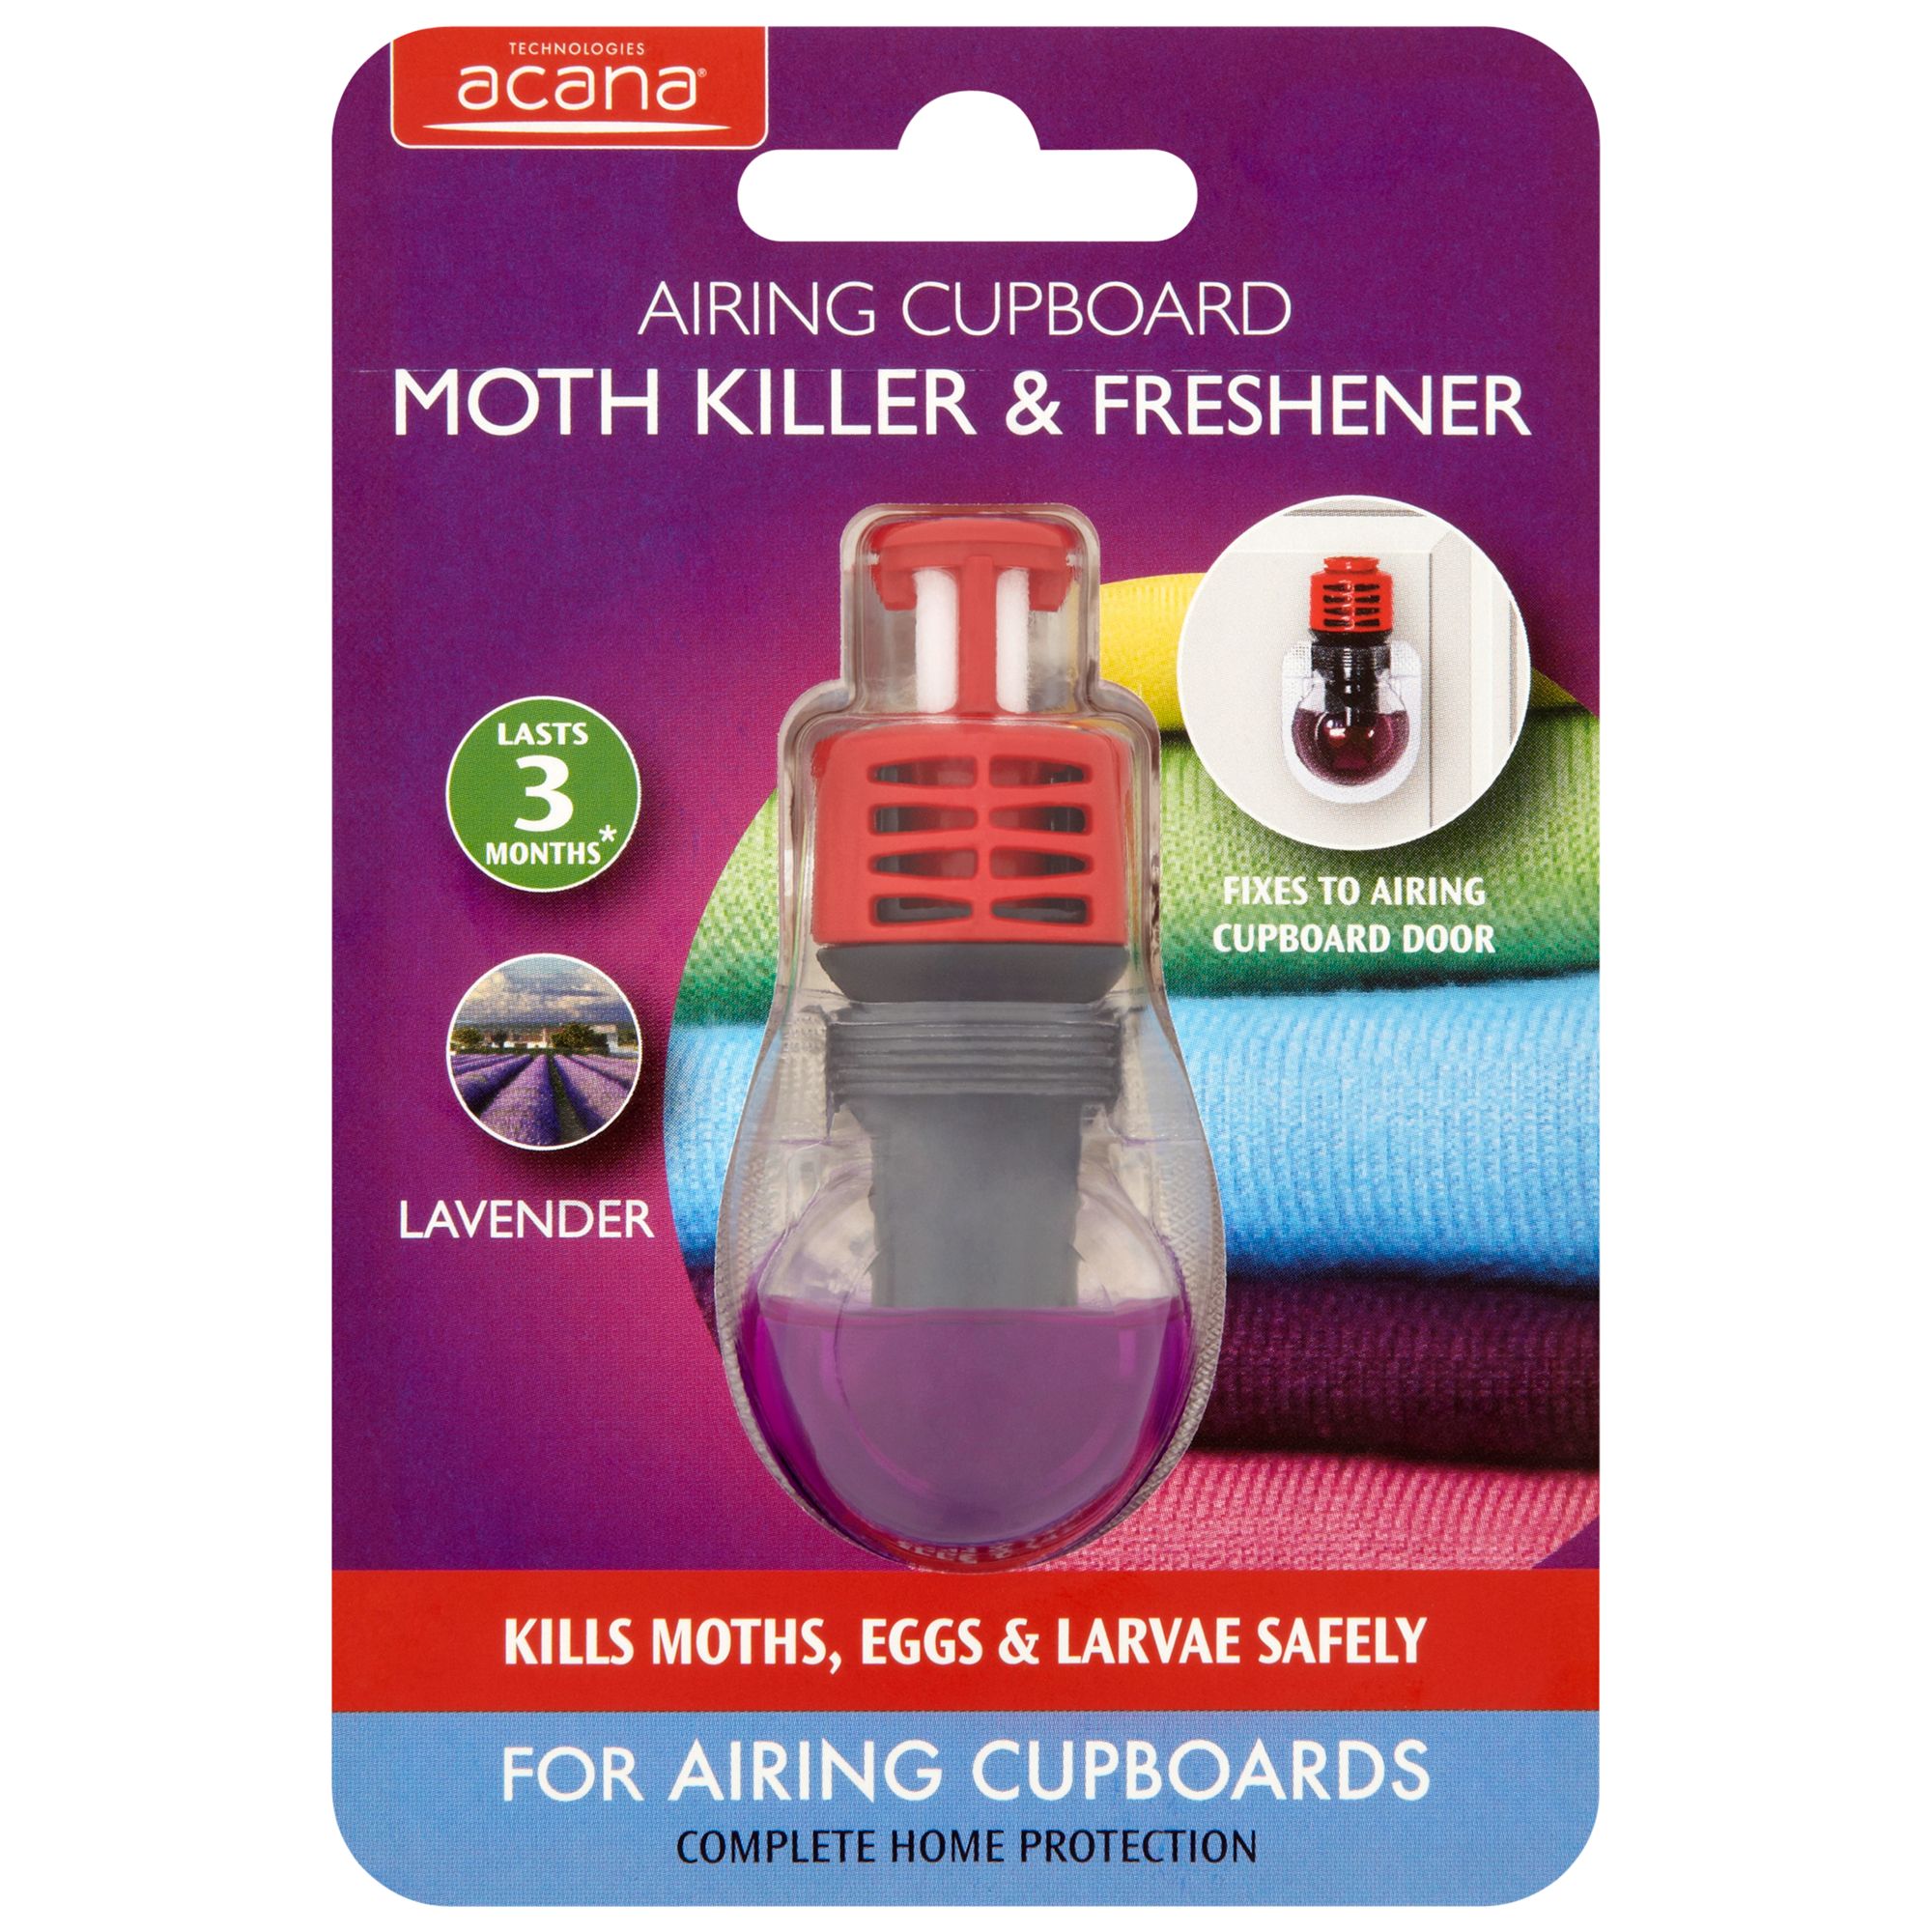 Acana Airing Cupboard Moth Killer and Freshener